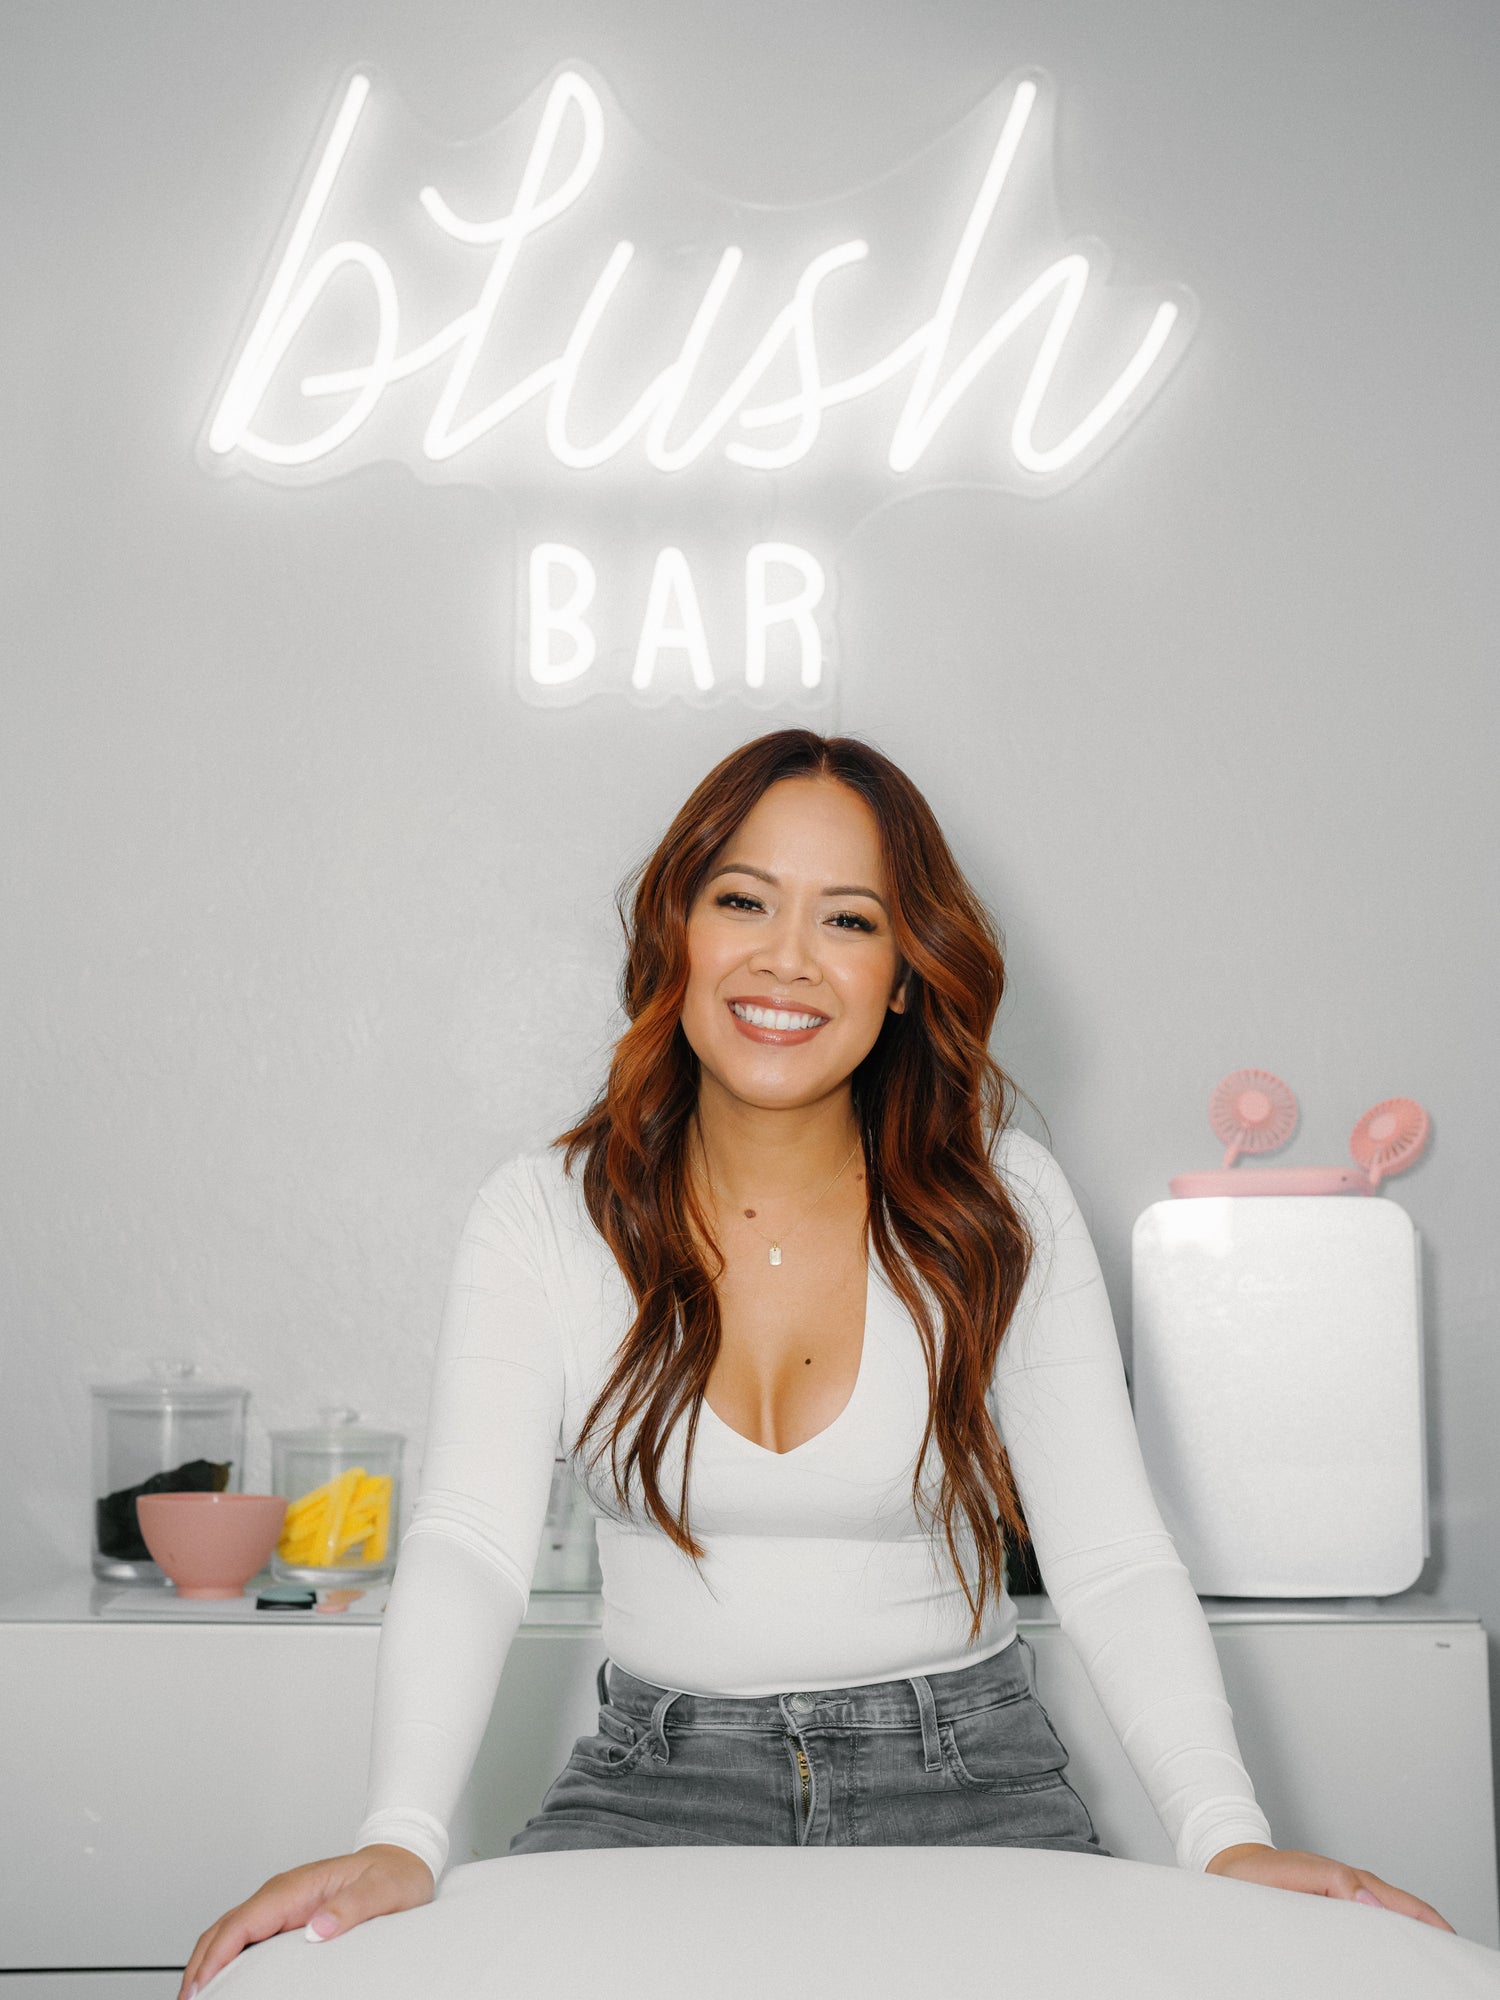 Kenda Keo, Licensed Esthetician and Owner of Blush Bar